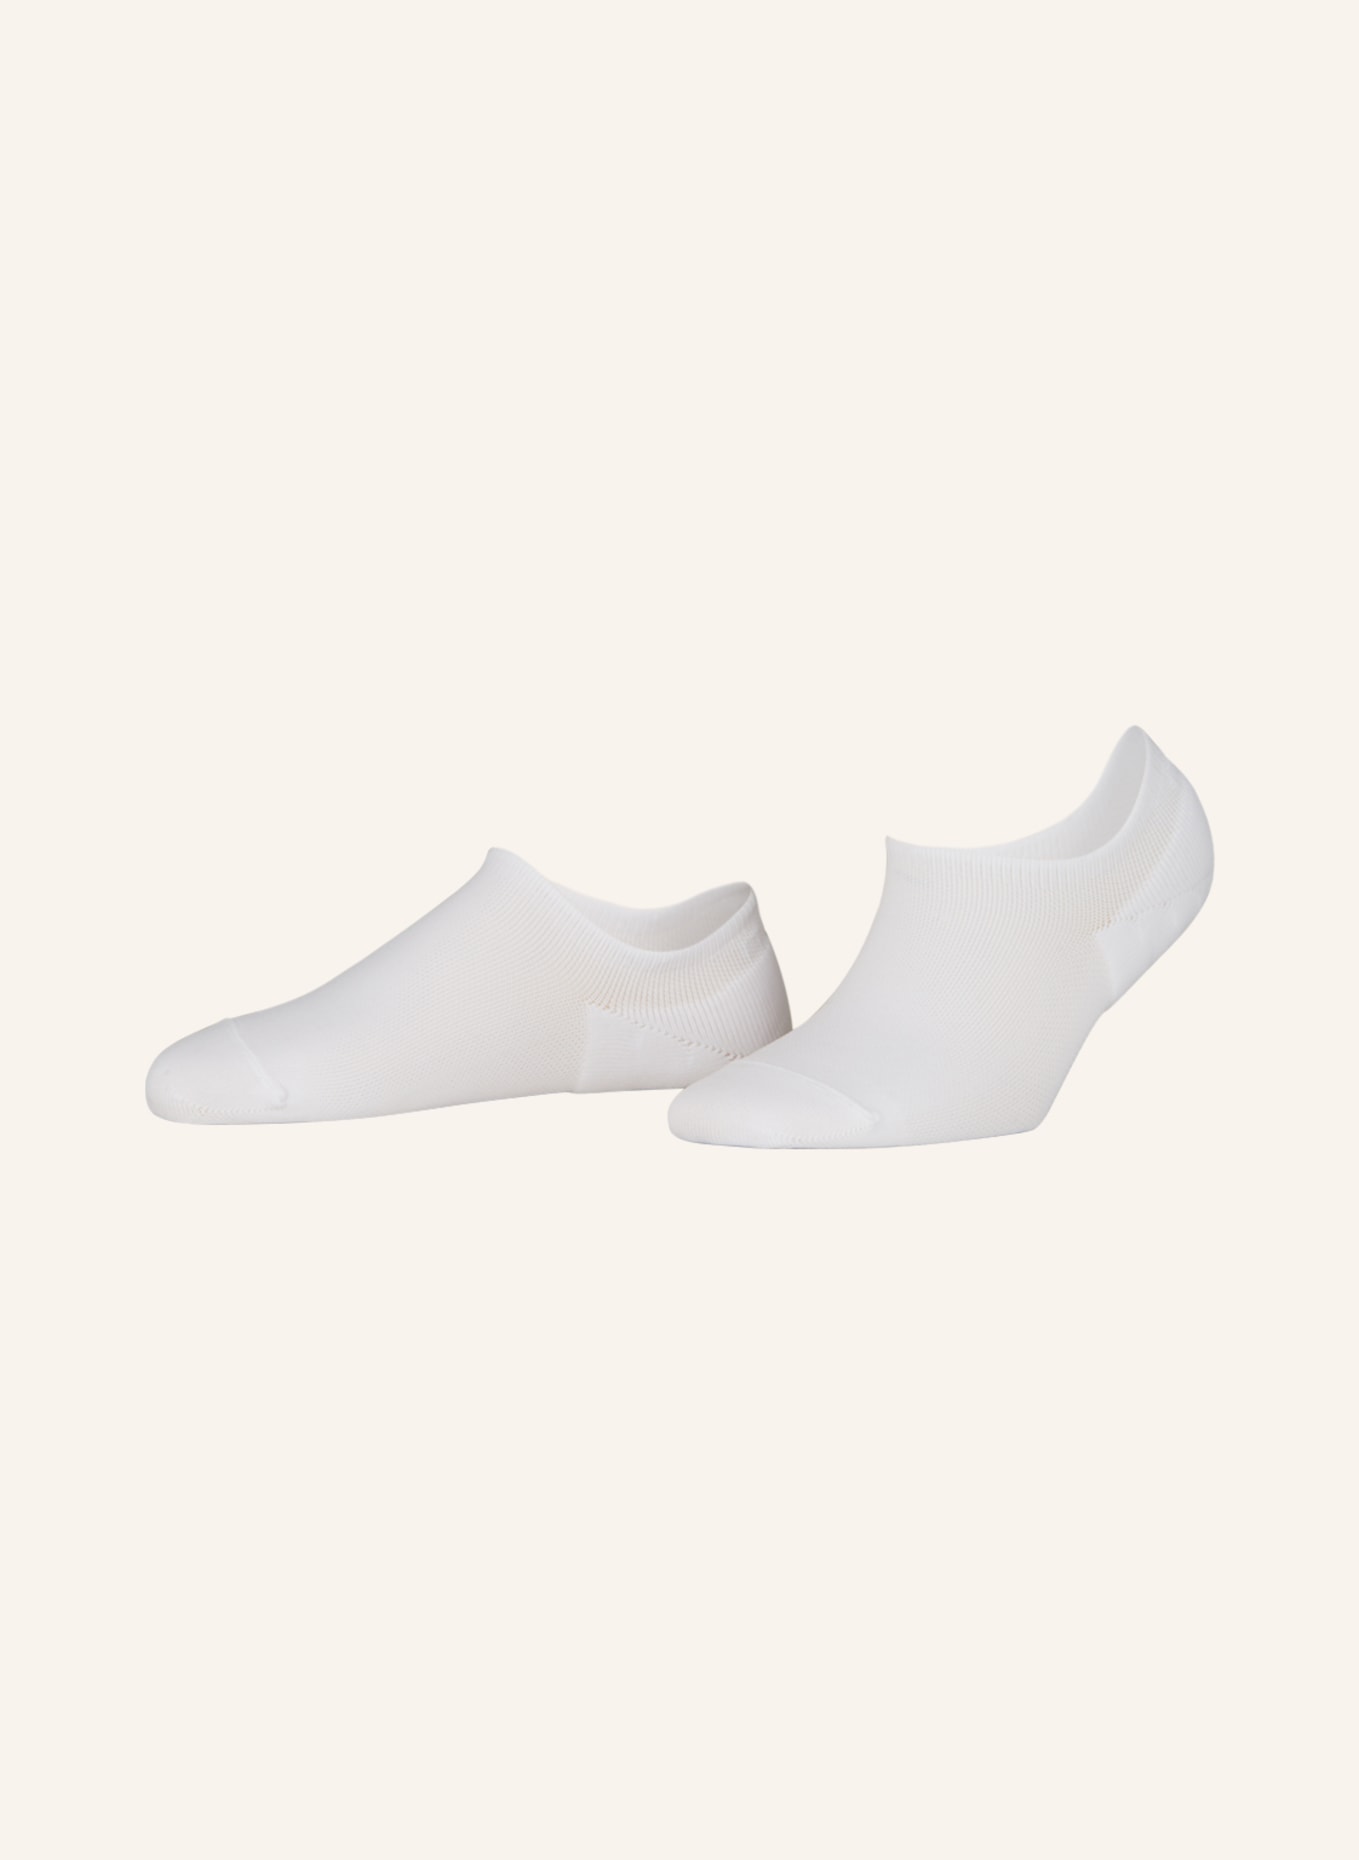 ITEM m6 Sneaker socks SNEAKER COTTON, Color: WHITE (Image 1)